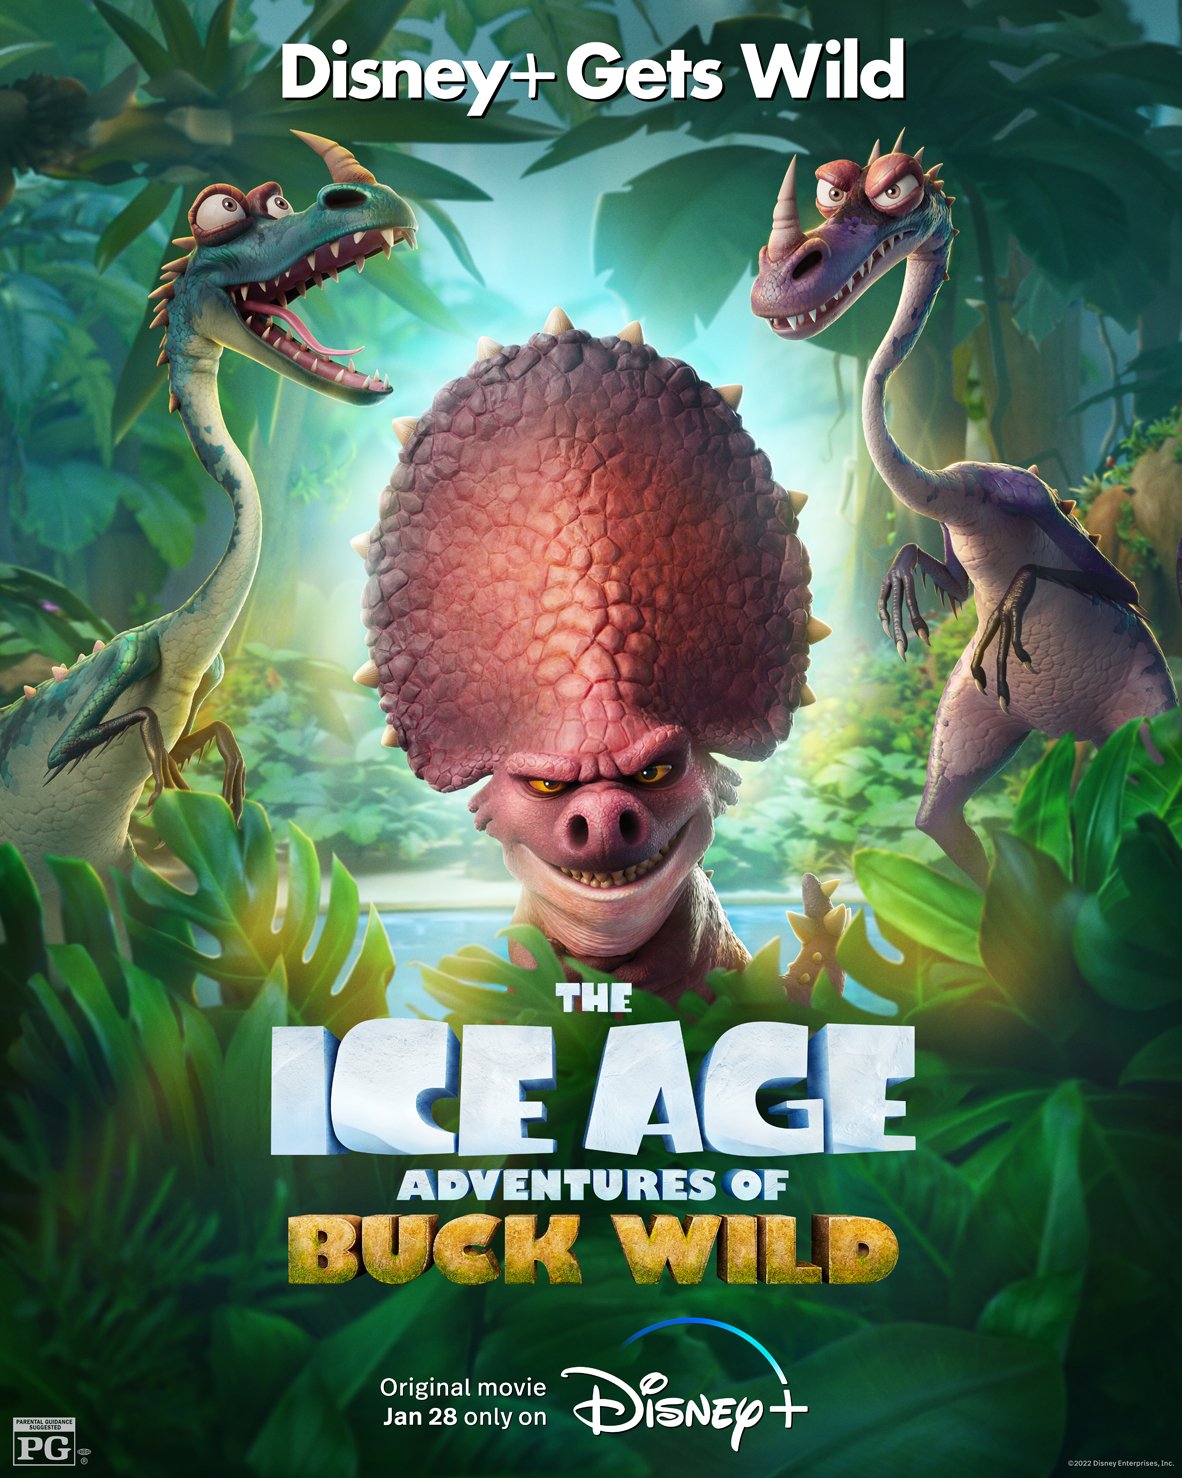 ice age: adventures of buck wild full movie